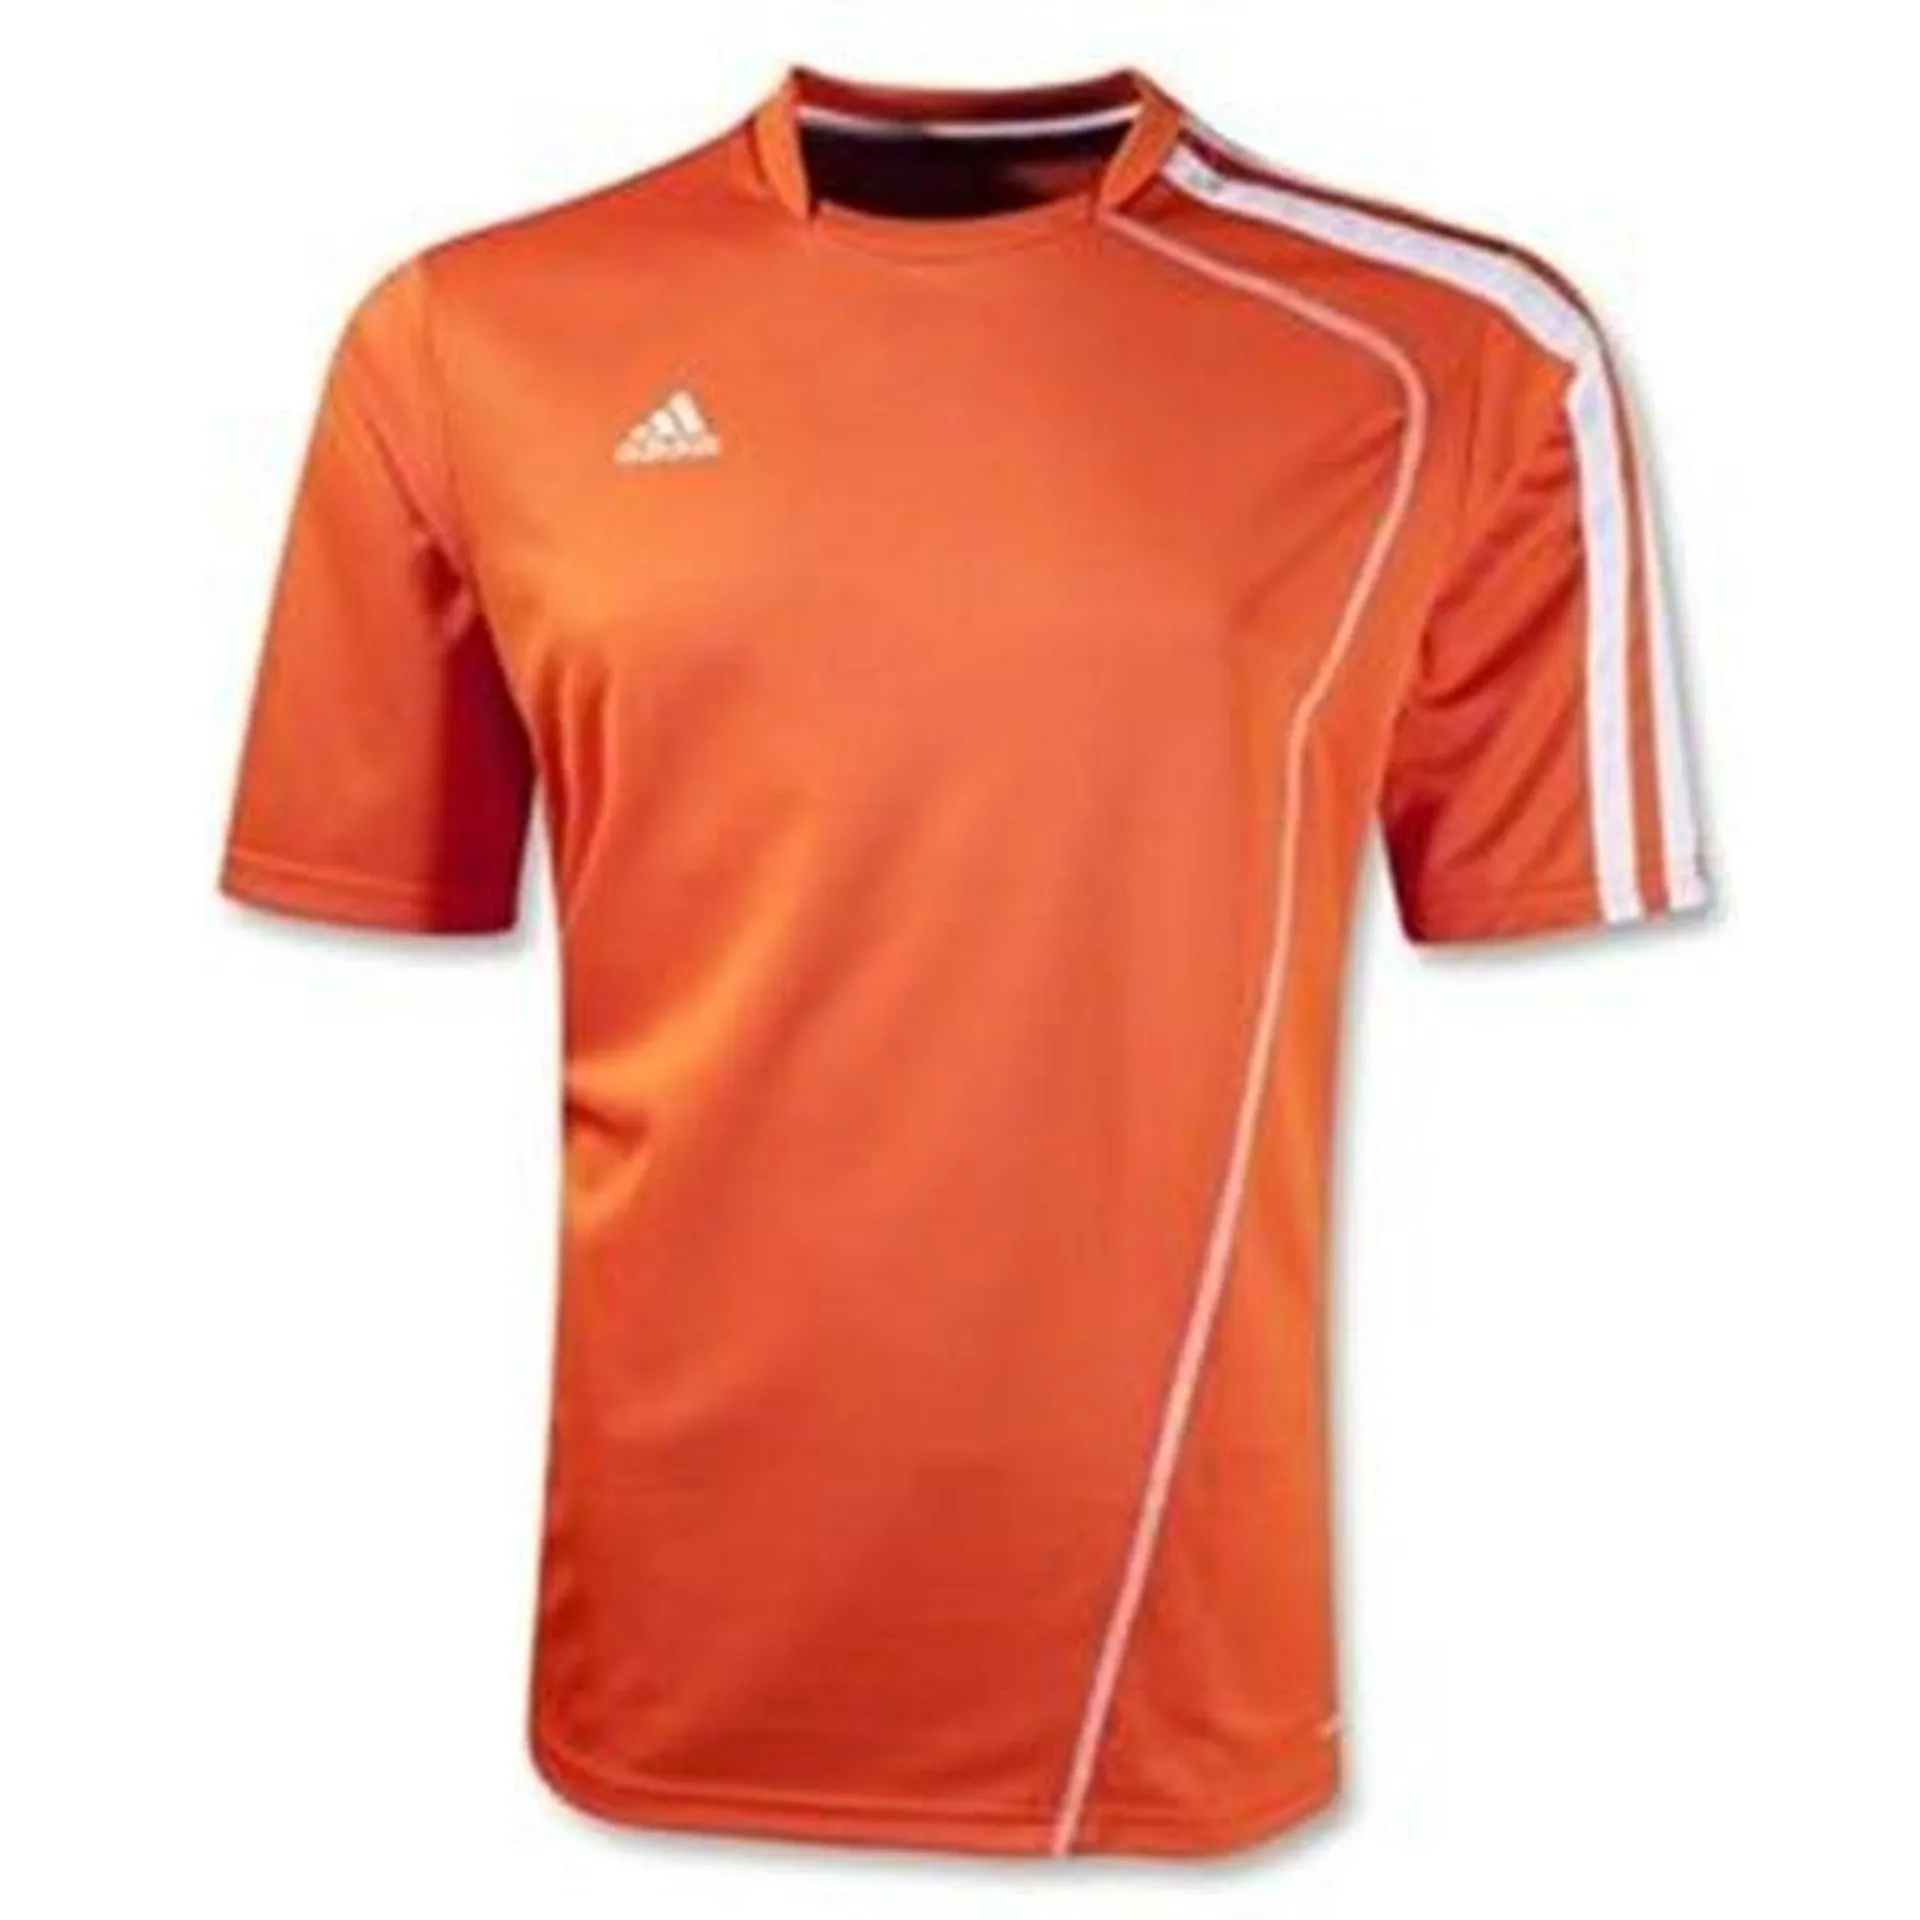 Adidas Boys Sossto Soccer Jersey T-Shirt Orange/White